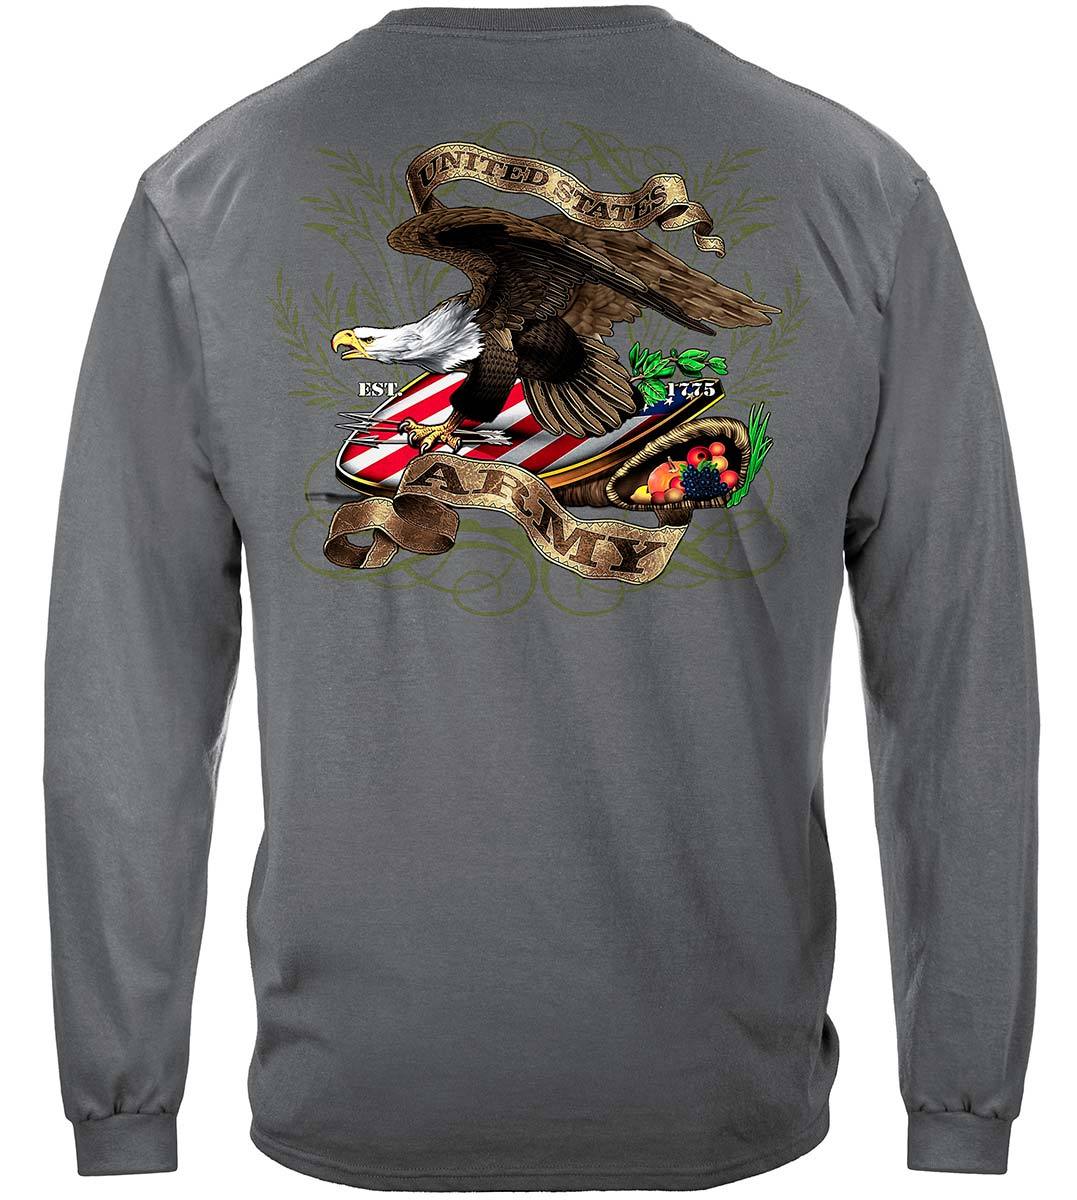 Army Shield And Eagle Premium T-Shirt